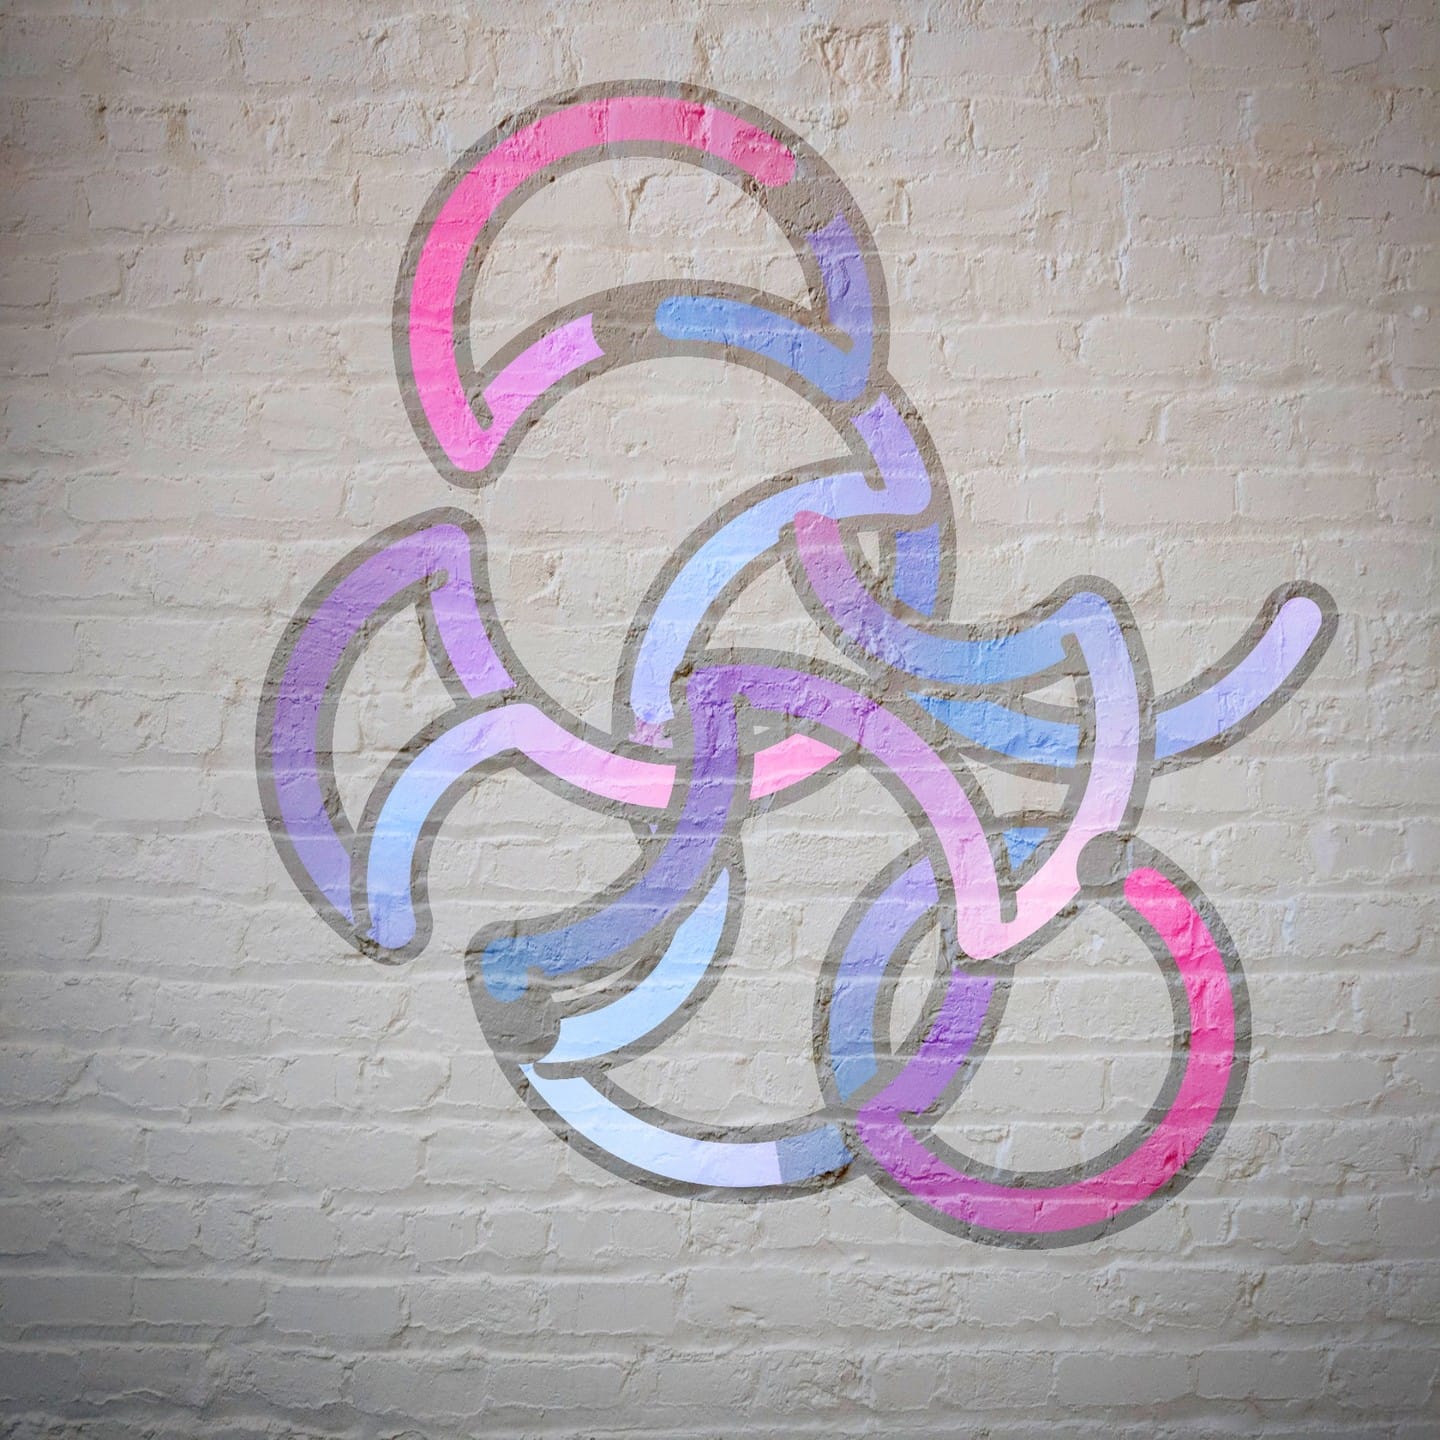 Wall art